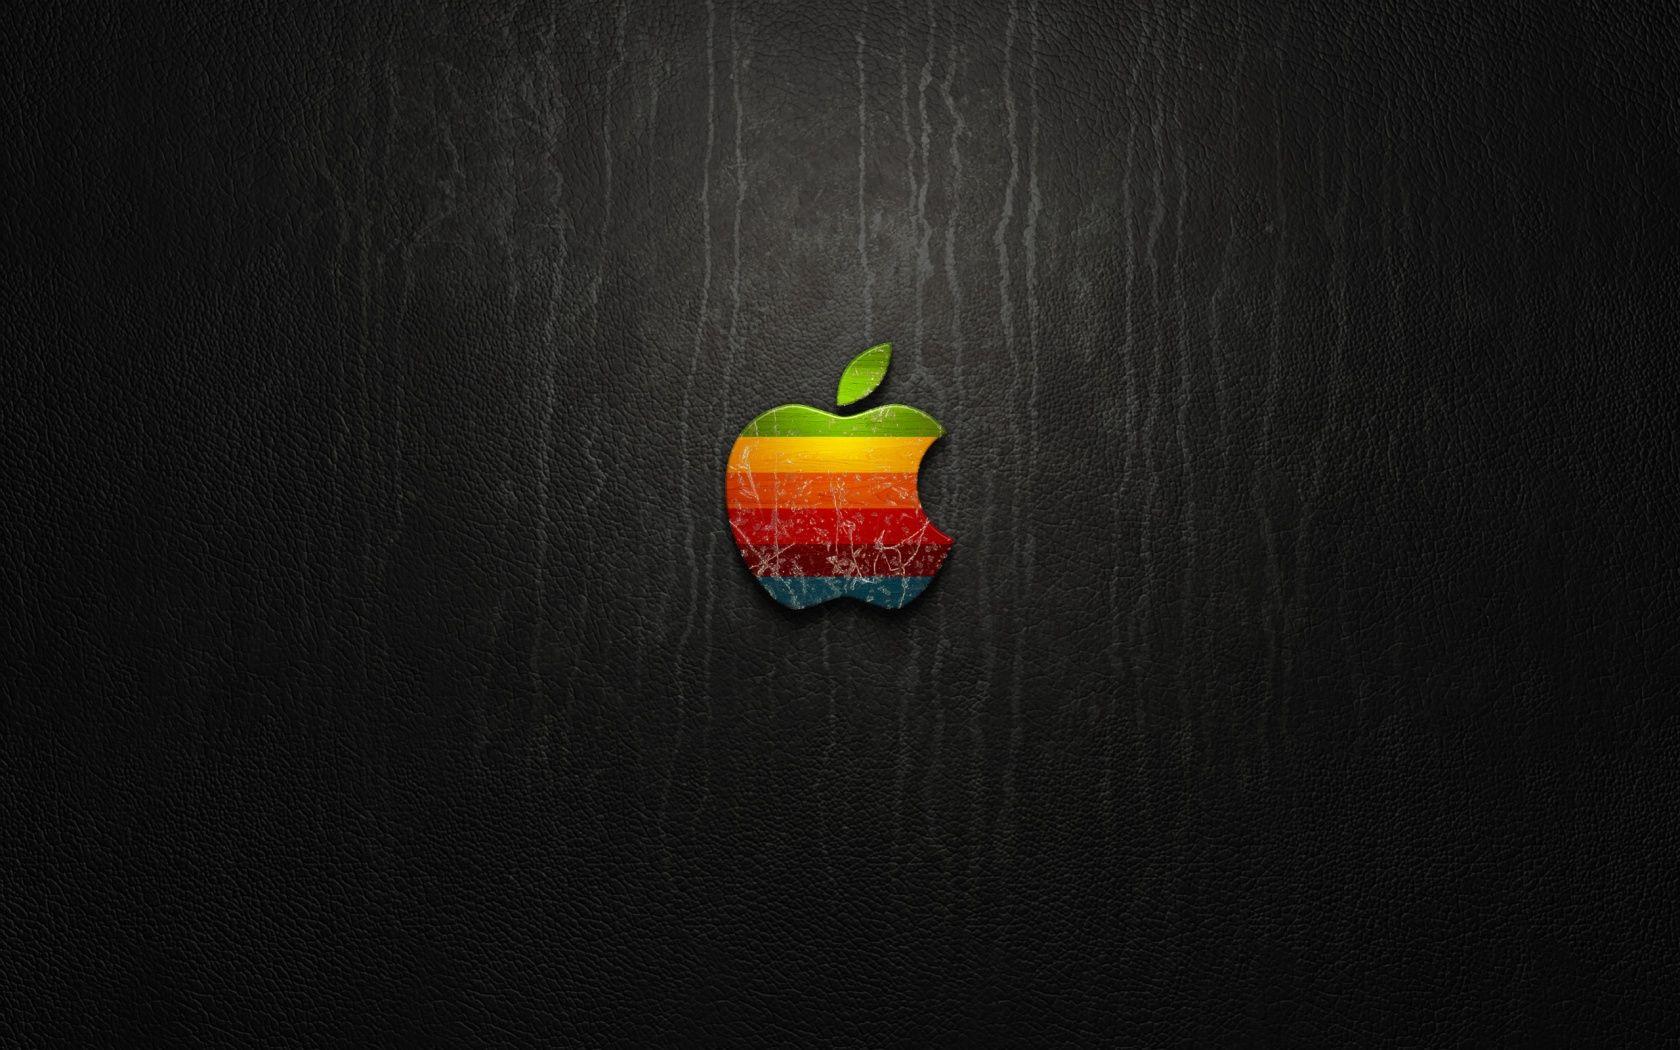 HD Apple Logo Wallpaper in jpg format for free download